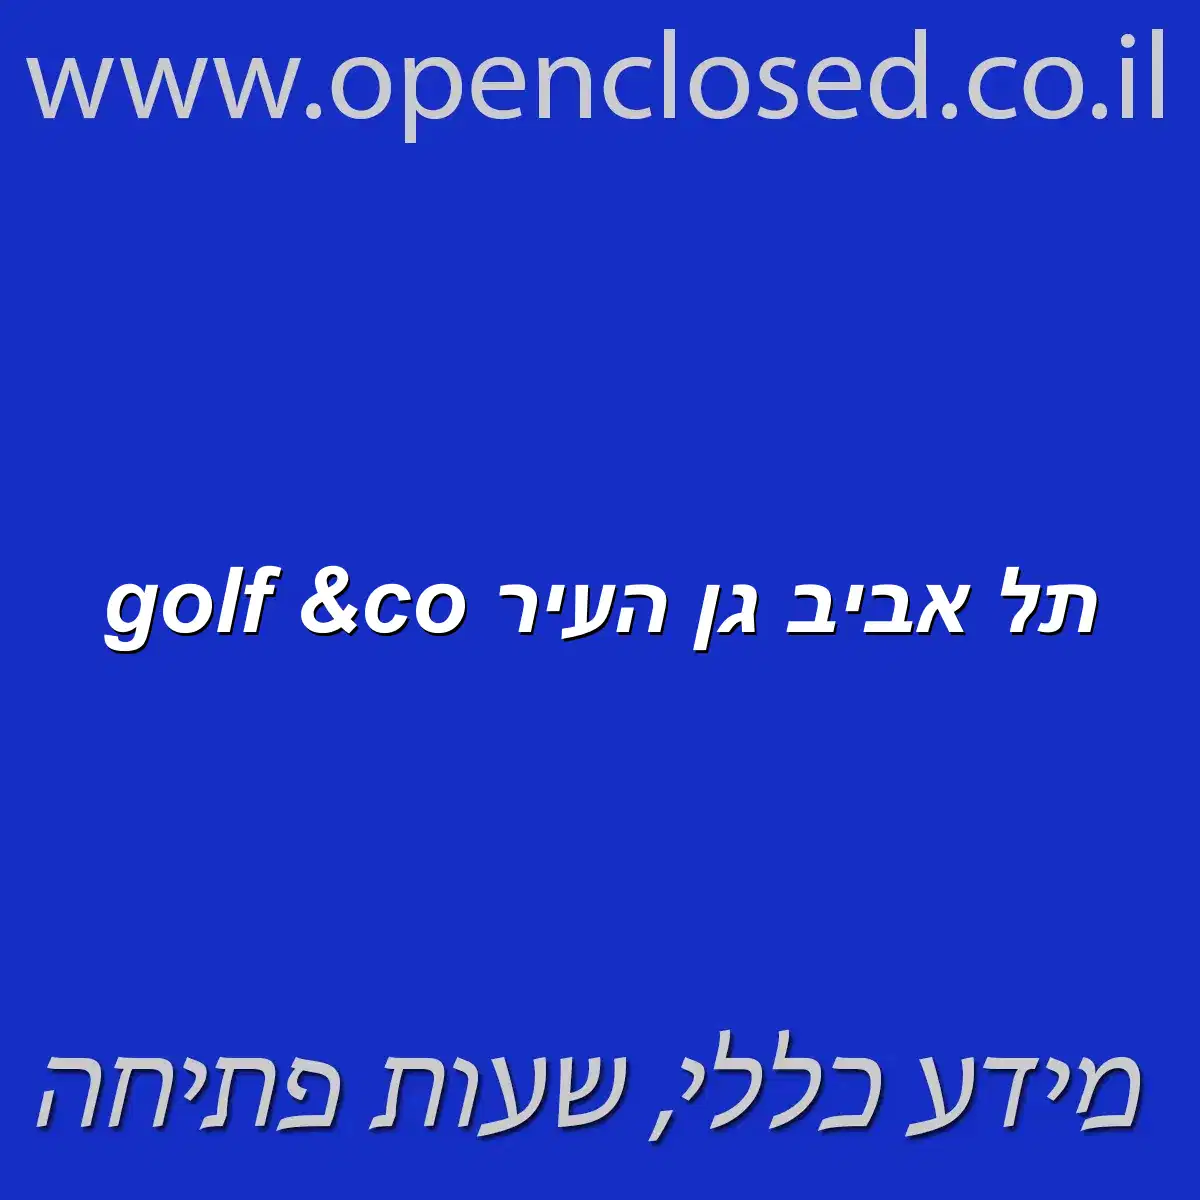 golf &co תל אביב גן העיר